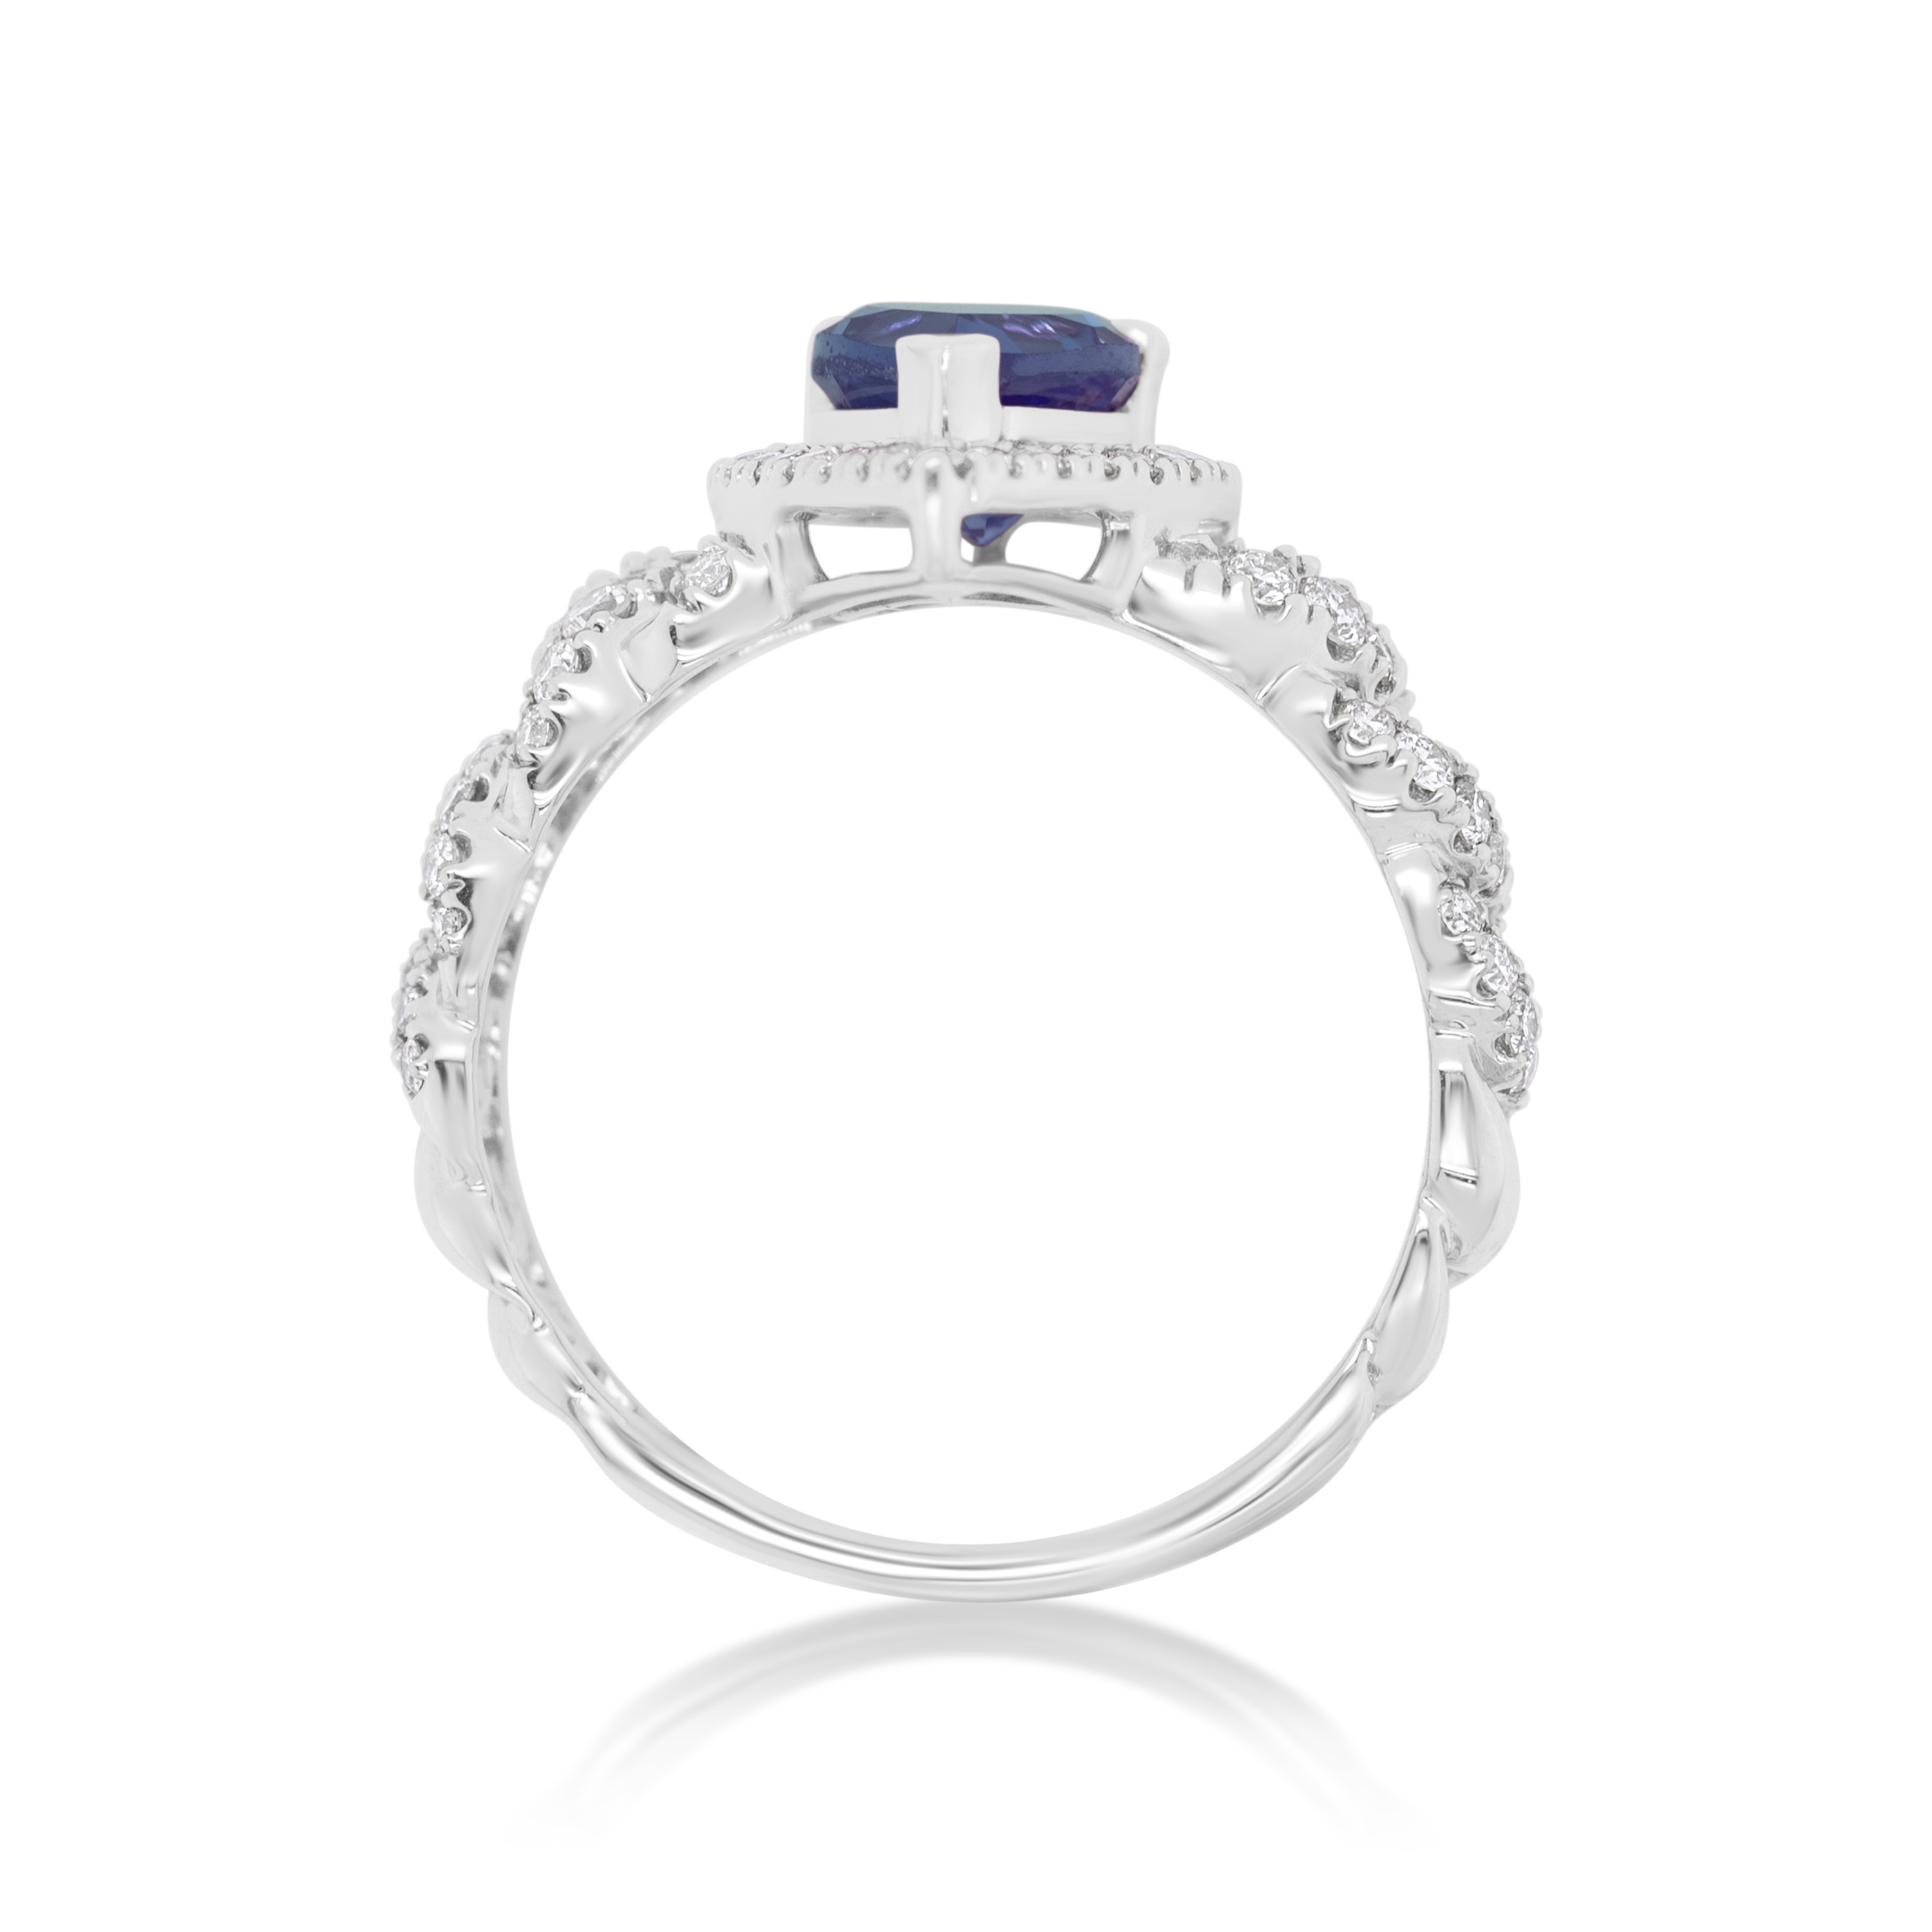 Diamond Ring 0.55 ct. 14K White Gold Blue Pear Shaped Center Stone